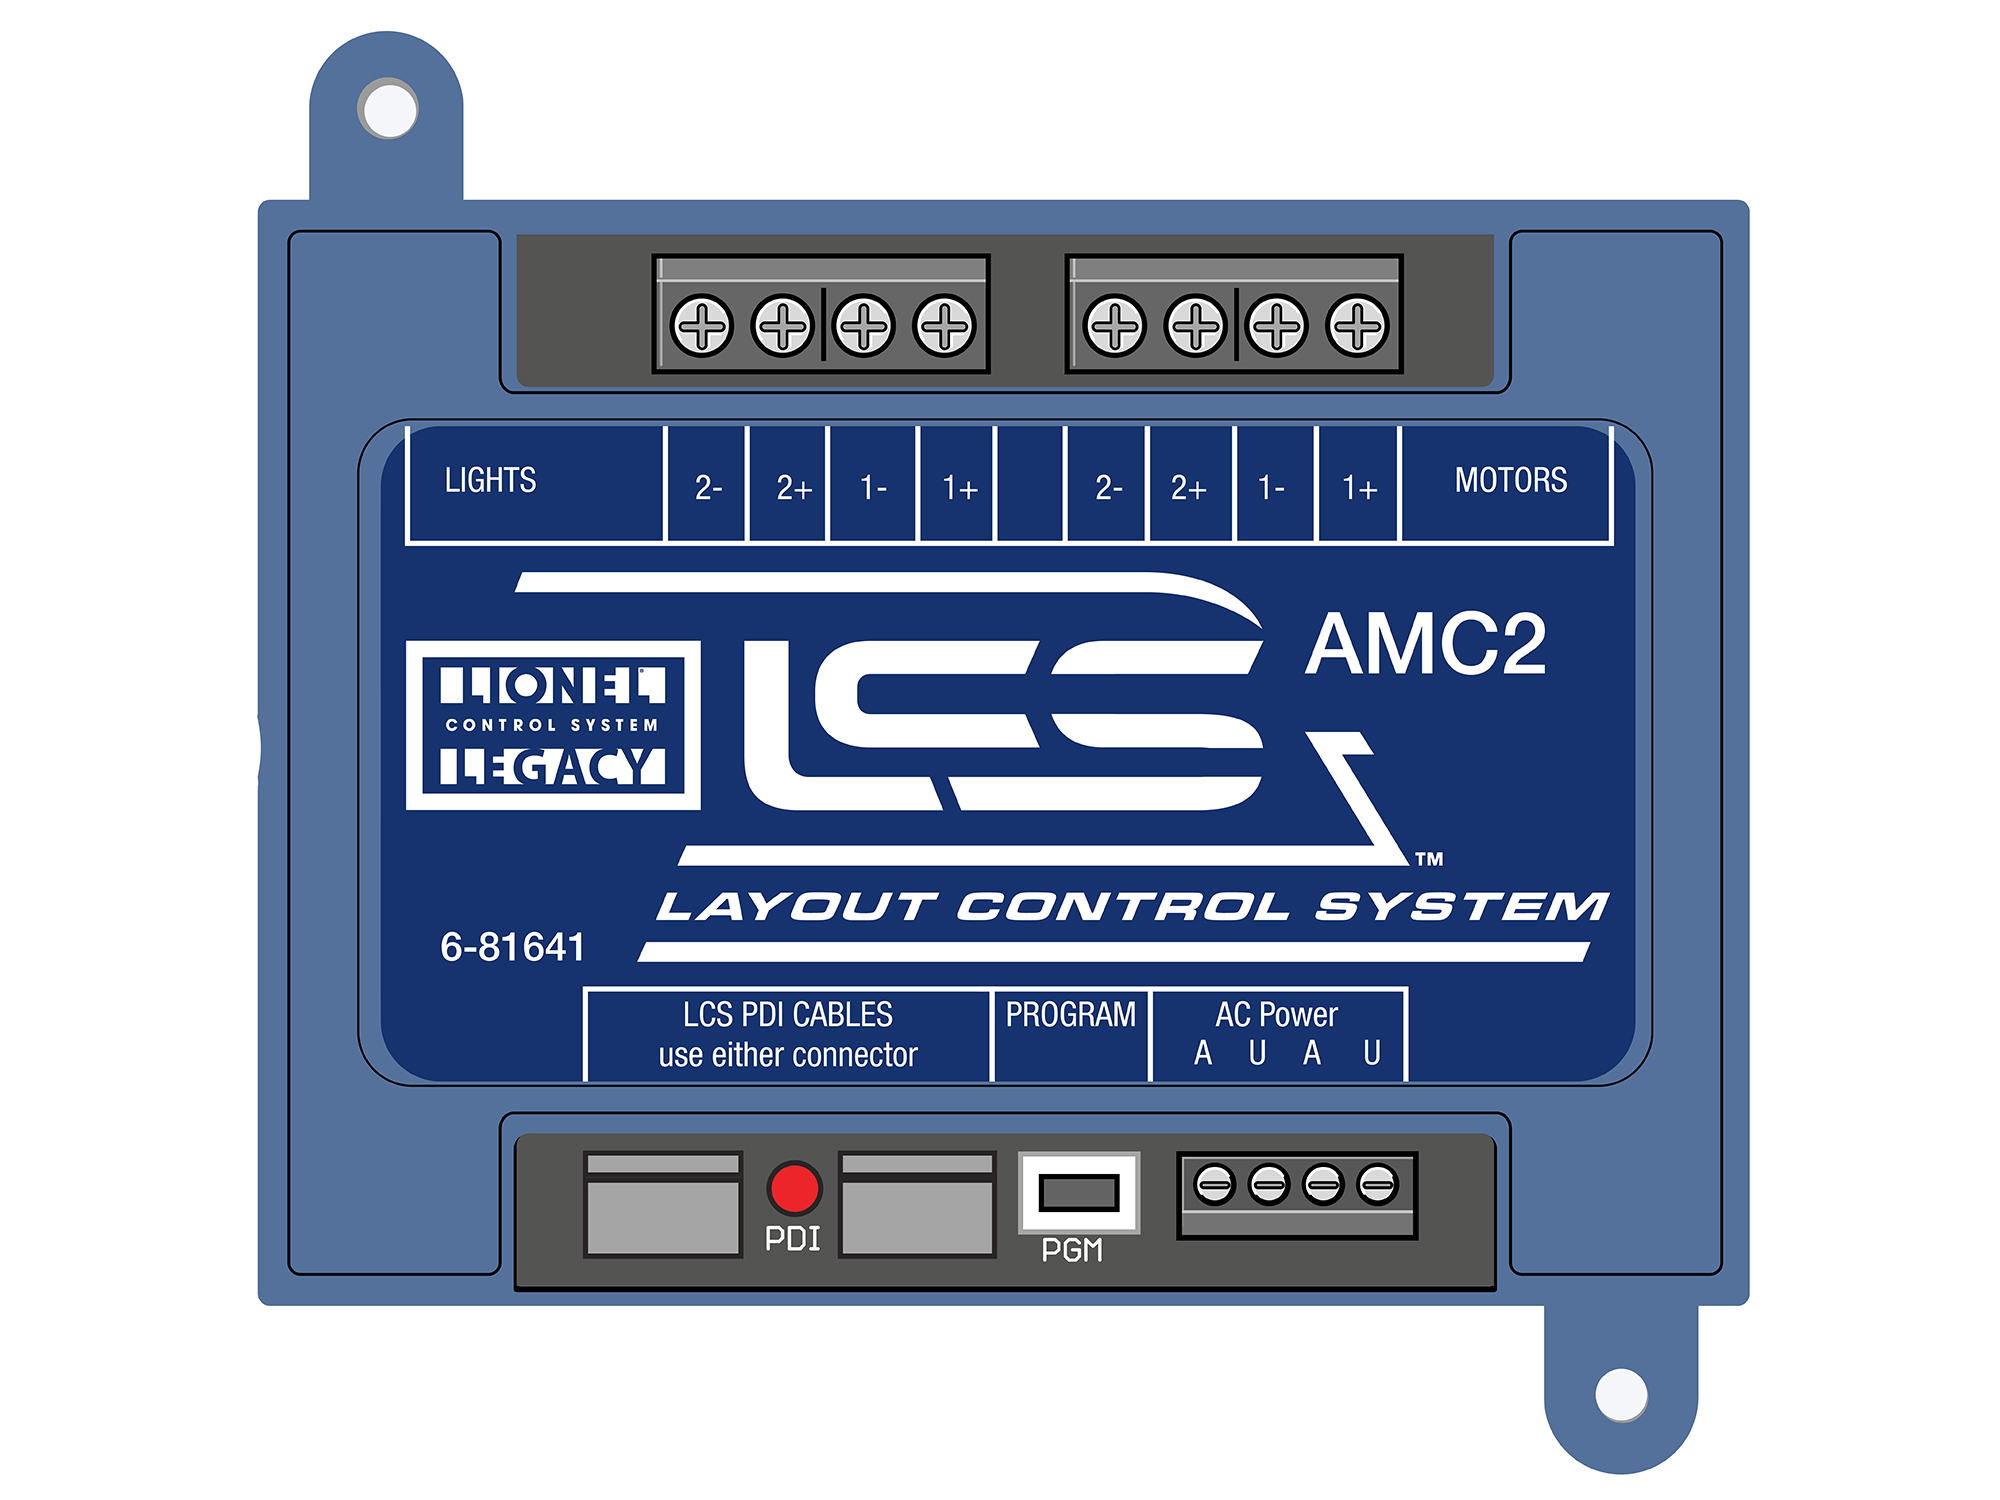 Lionel 681641 Legacy AMC-2 Accessory Motor/Light Controller